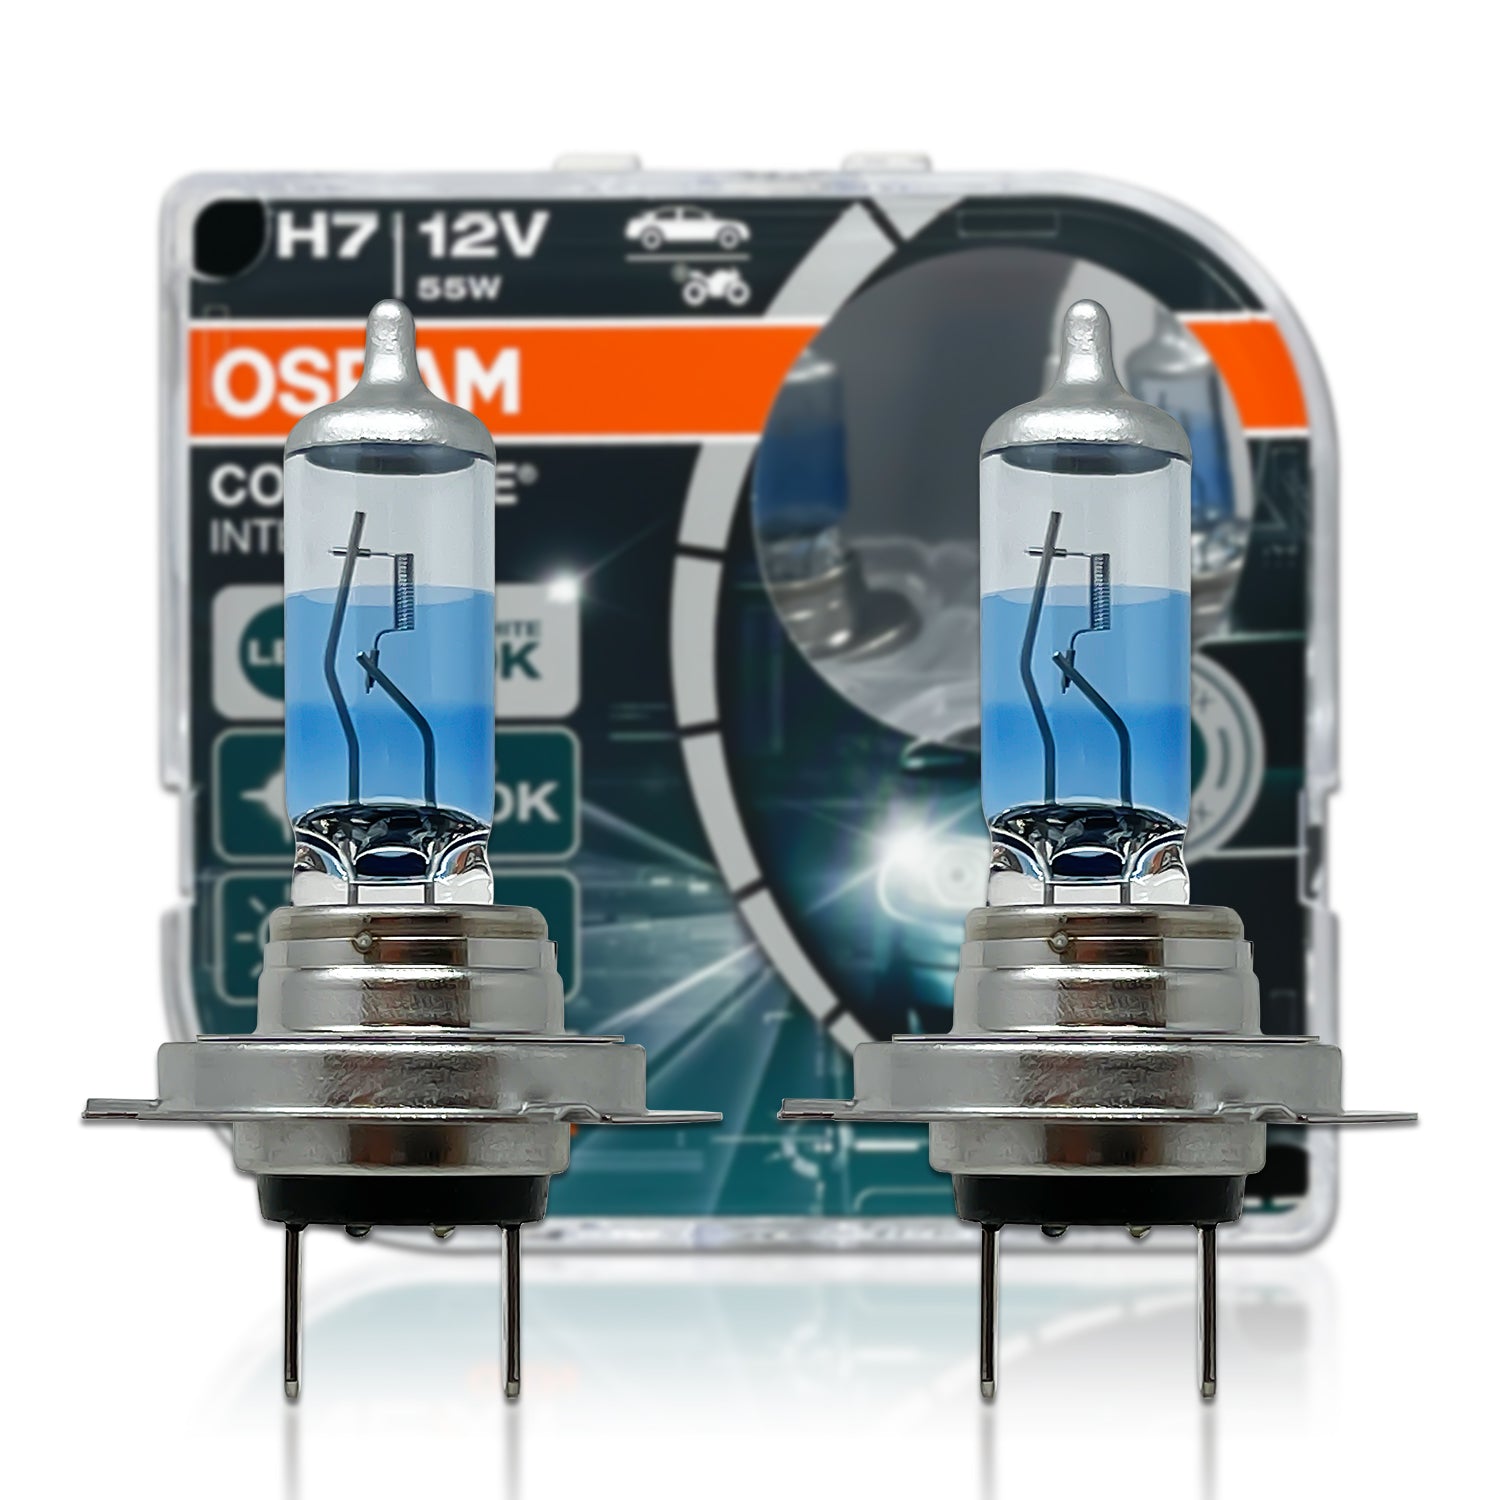 64210CBN OSRAM COOL BLUE INTENSE next Generation H7 12V 55W PX26d